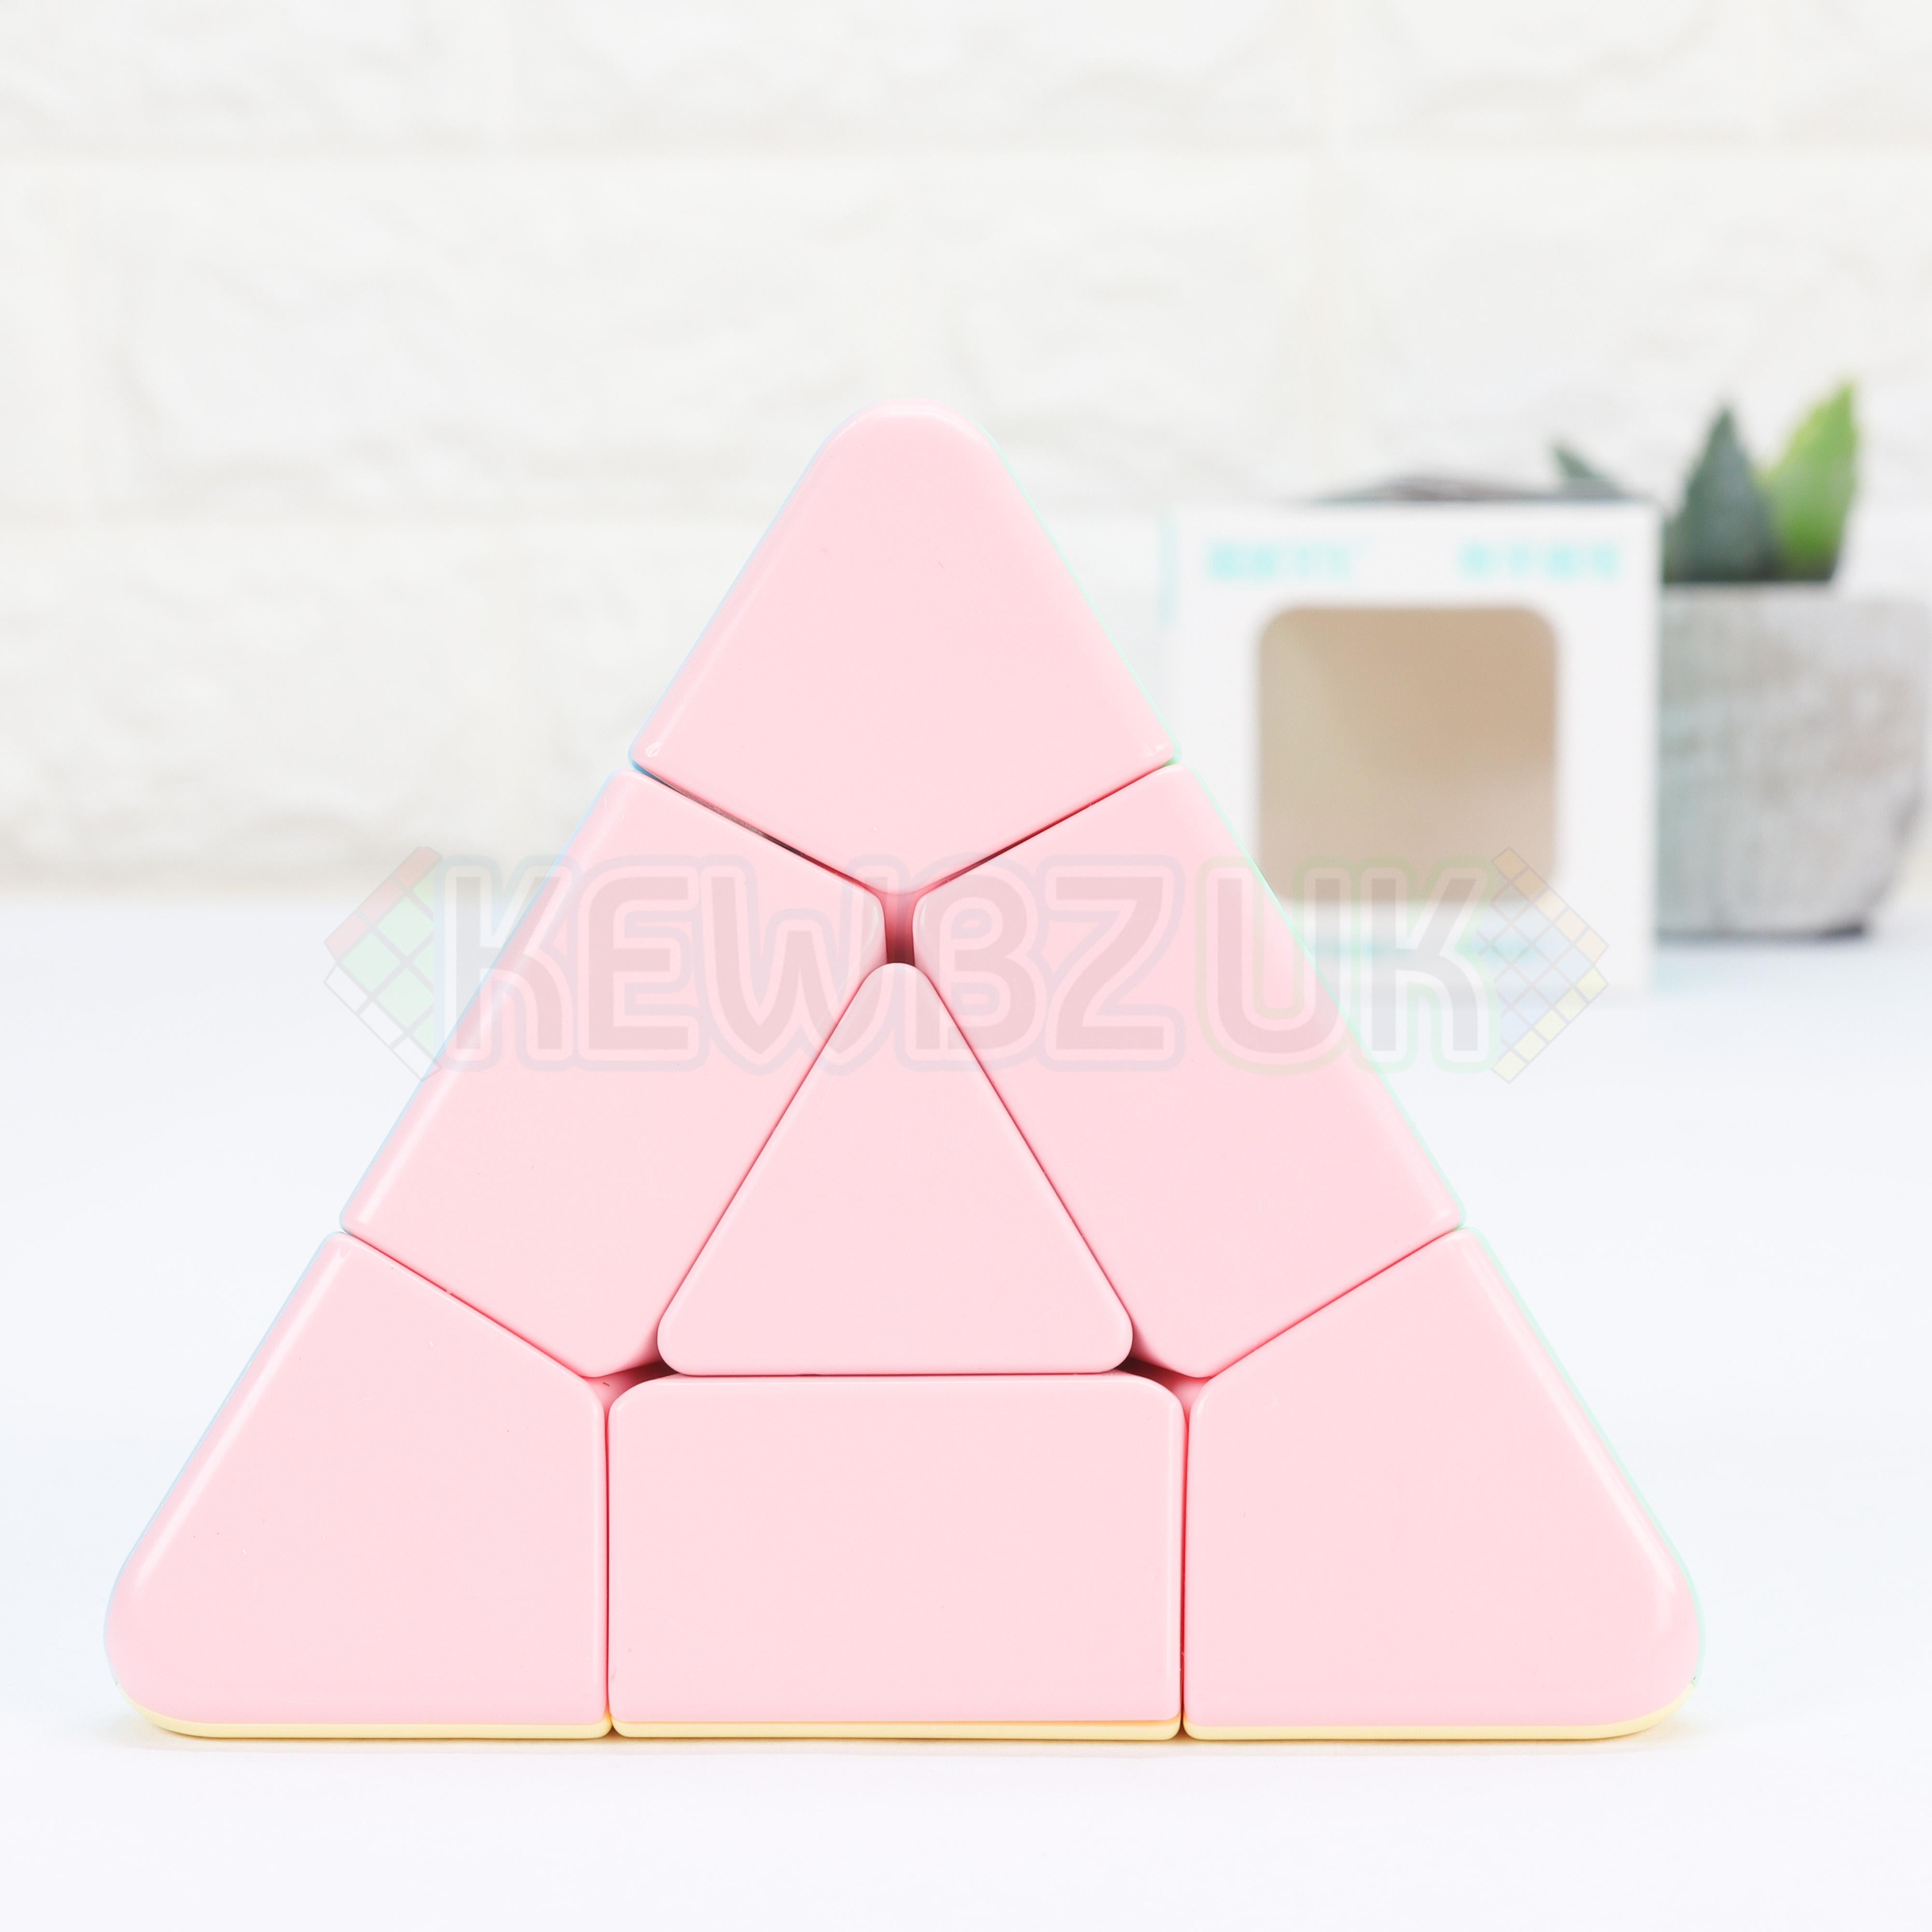 MoYu Triangle Pyraminx